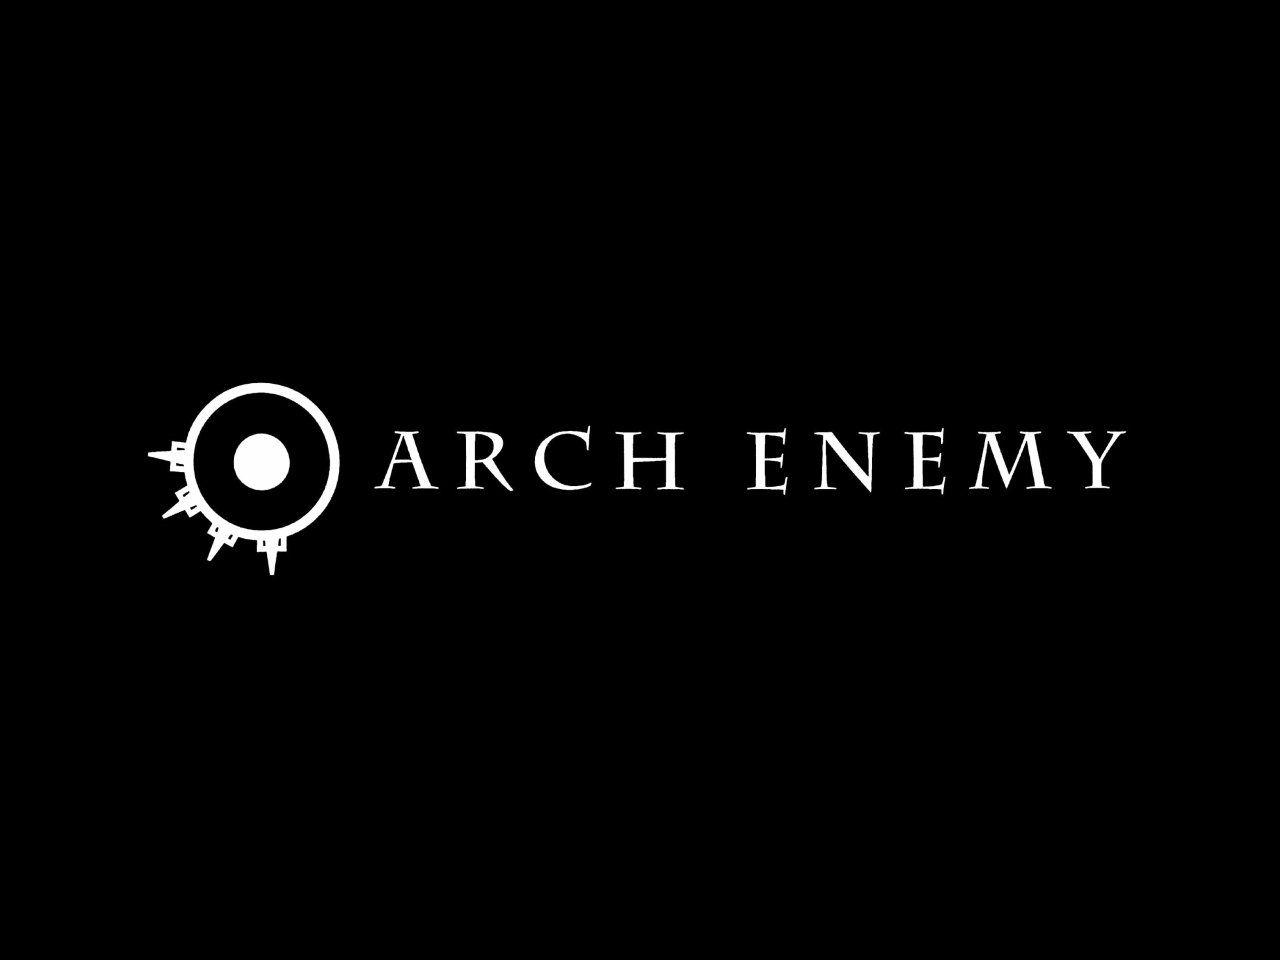 Arch Enemy Logo - Pin by VinothKannan M on p BHC | Pinterest | Arch enemy, Death metal ...